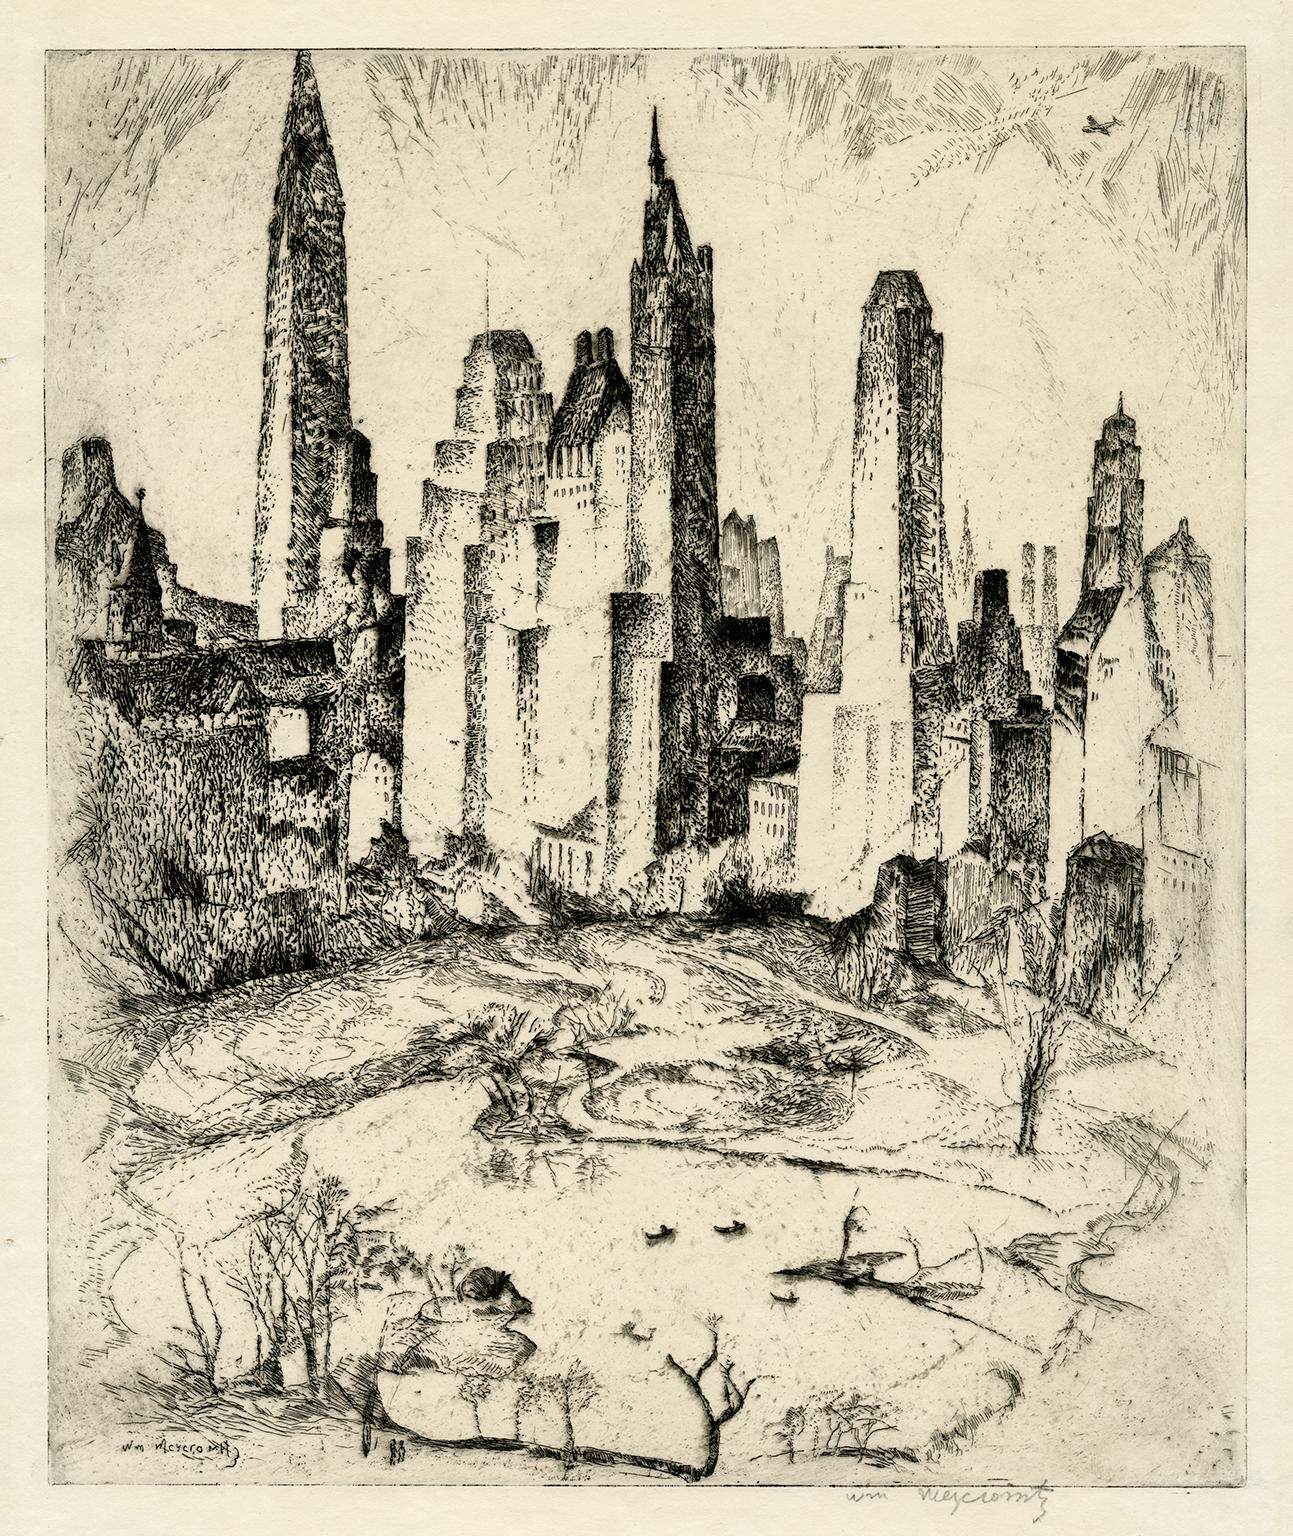 William Meyerowitz Landscape Print - 'New York, Central Park' — 1930s American Modernism